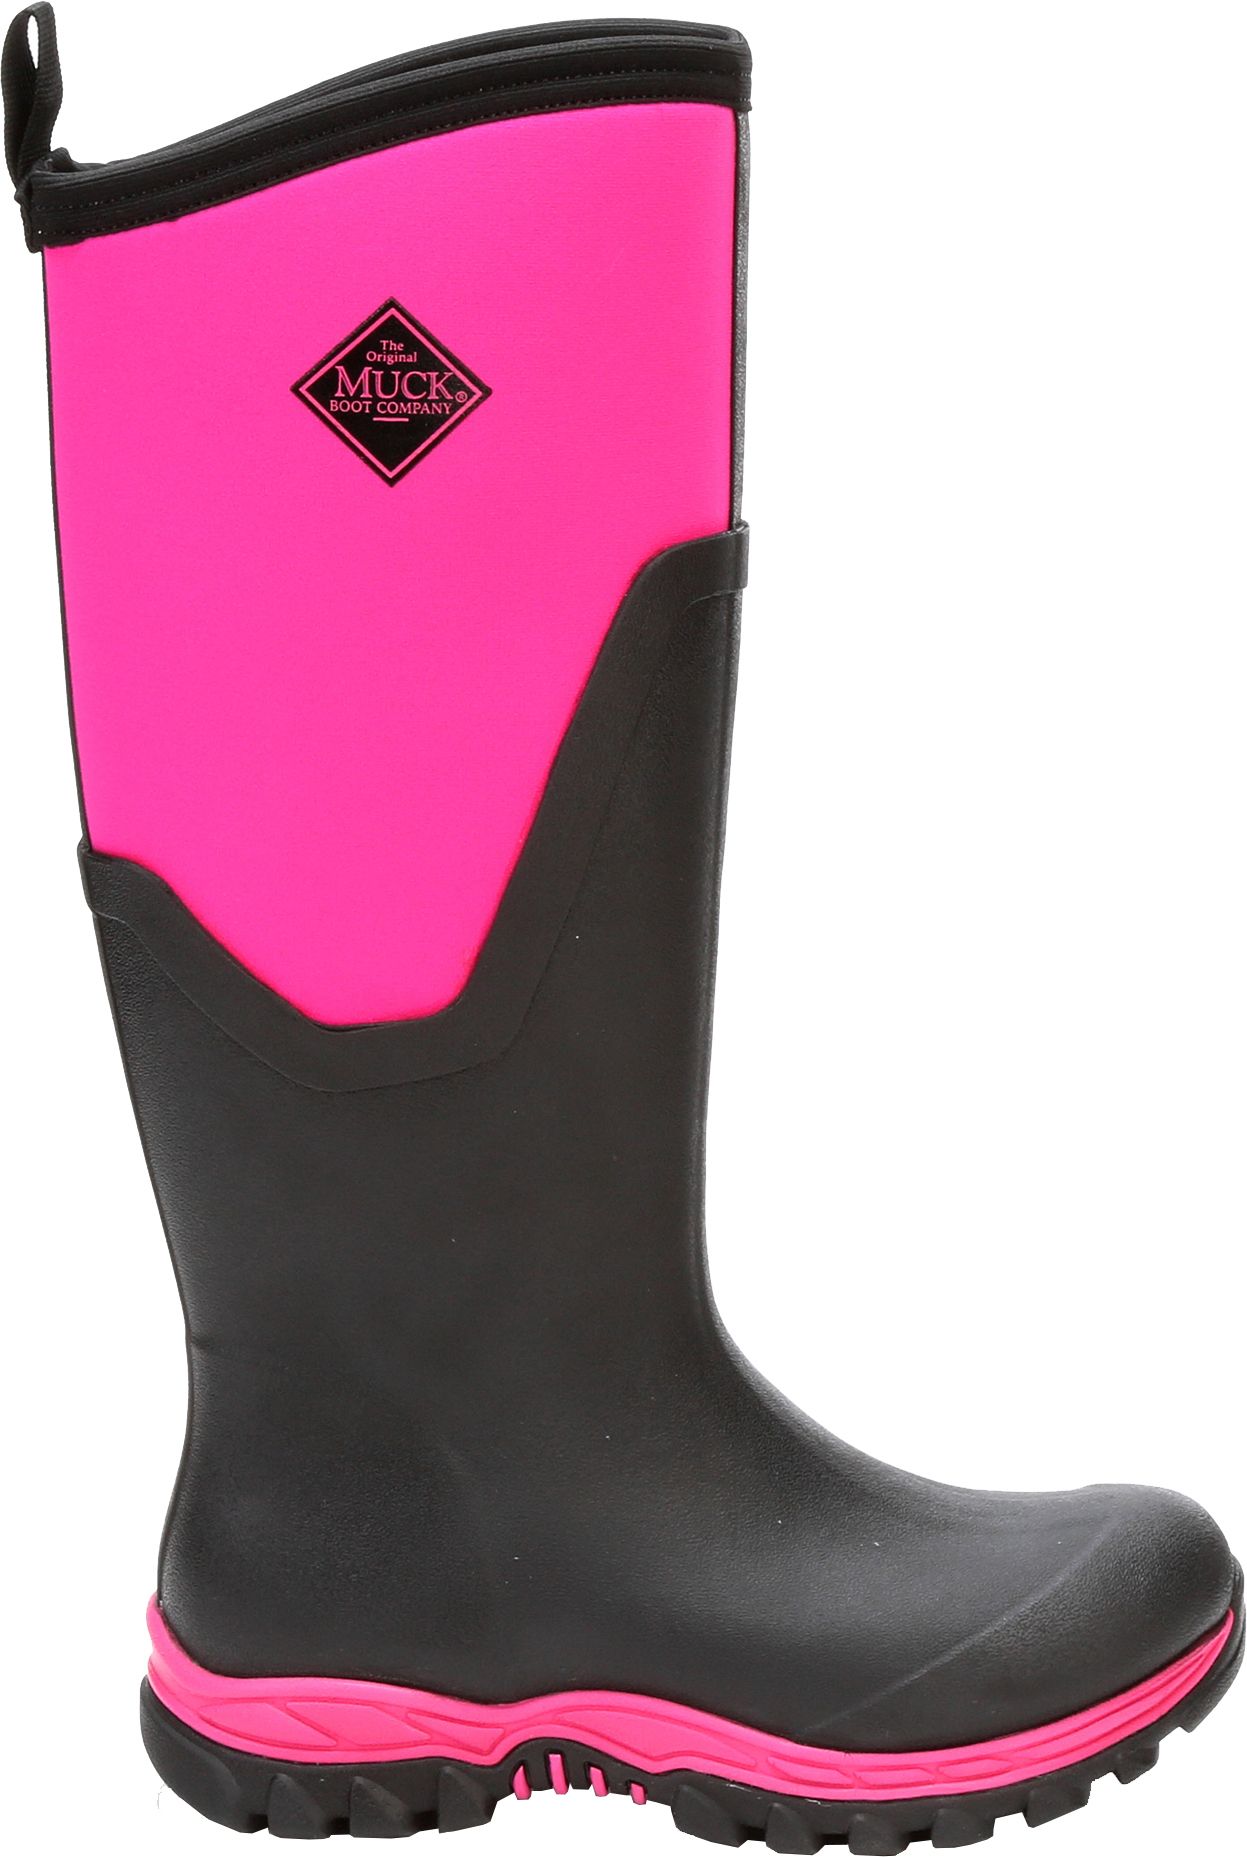 women's arctic muck boots on sale